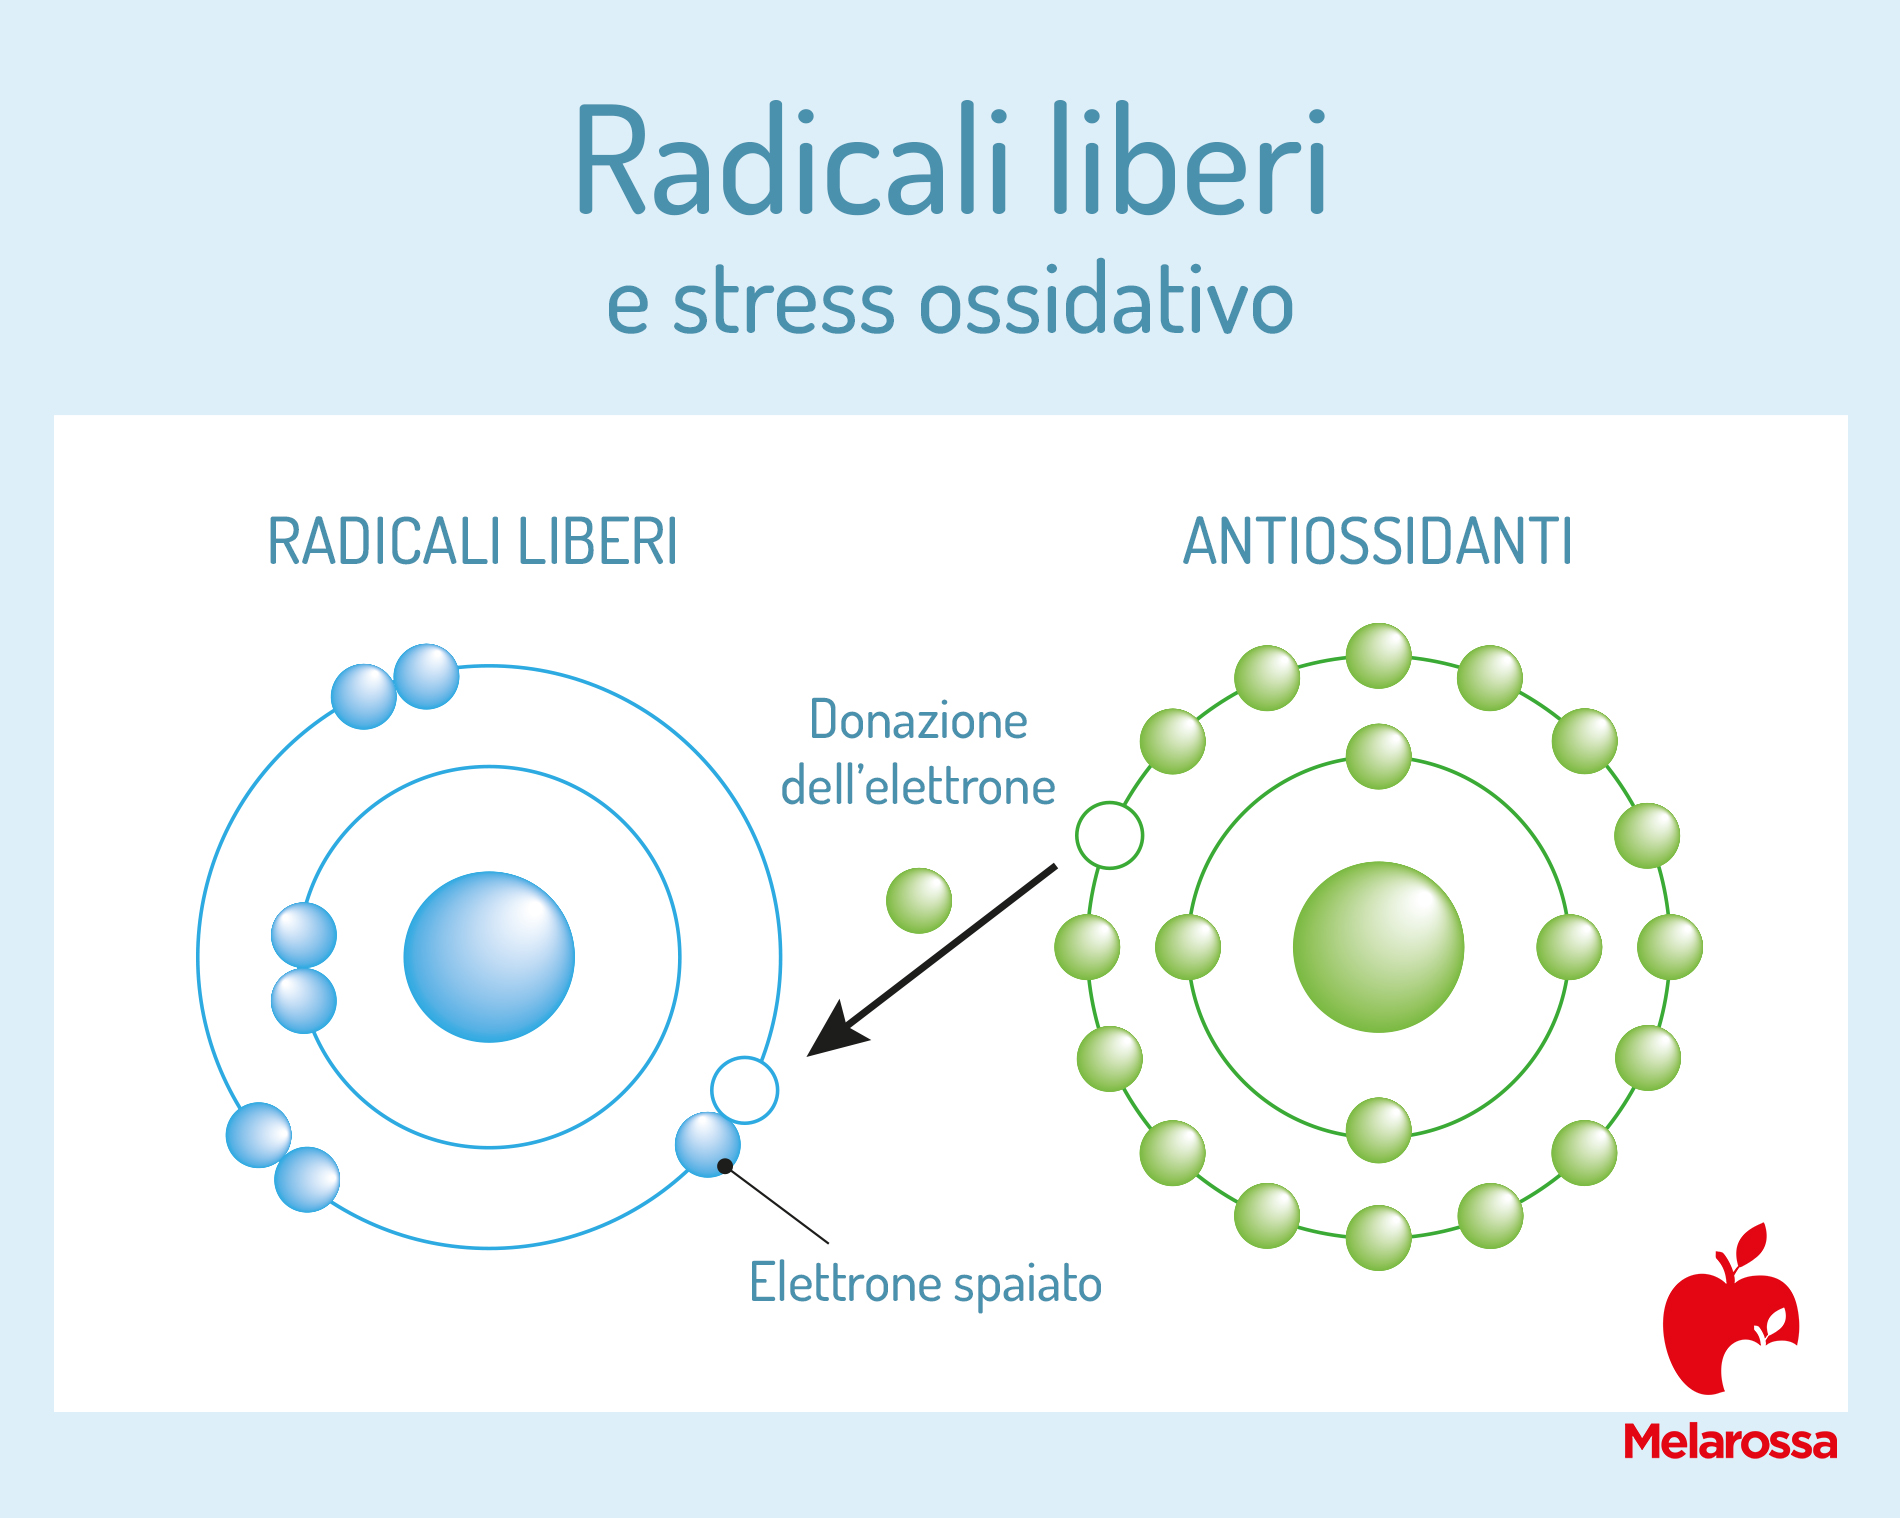 Radicali liberi e stress ossidativo